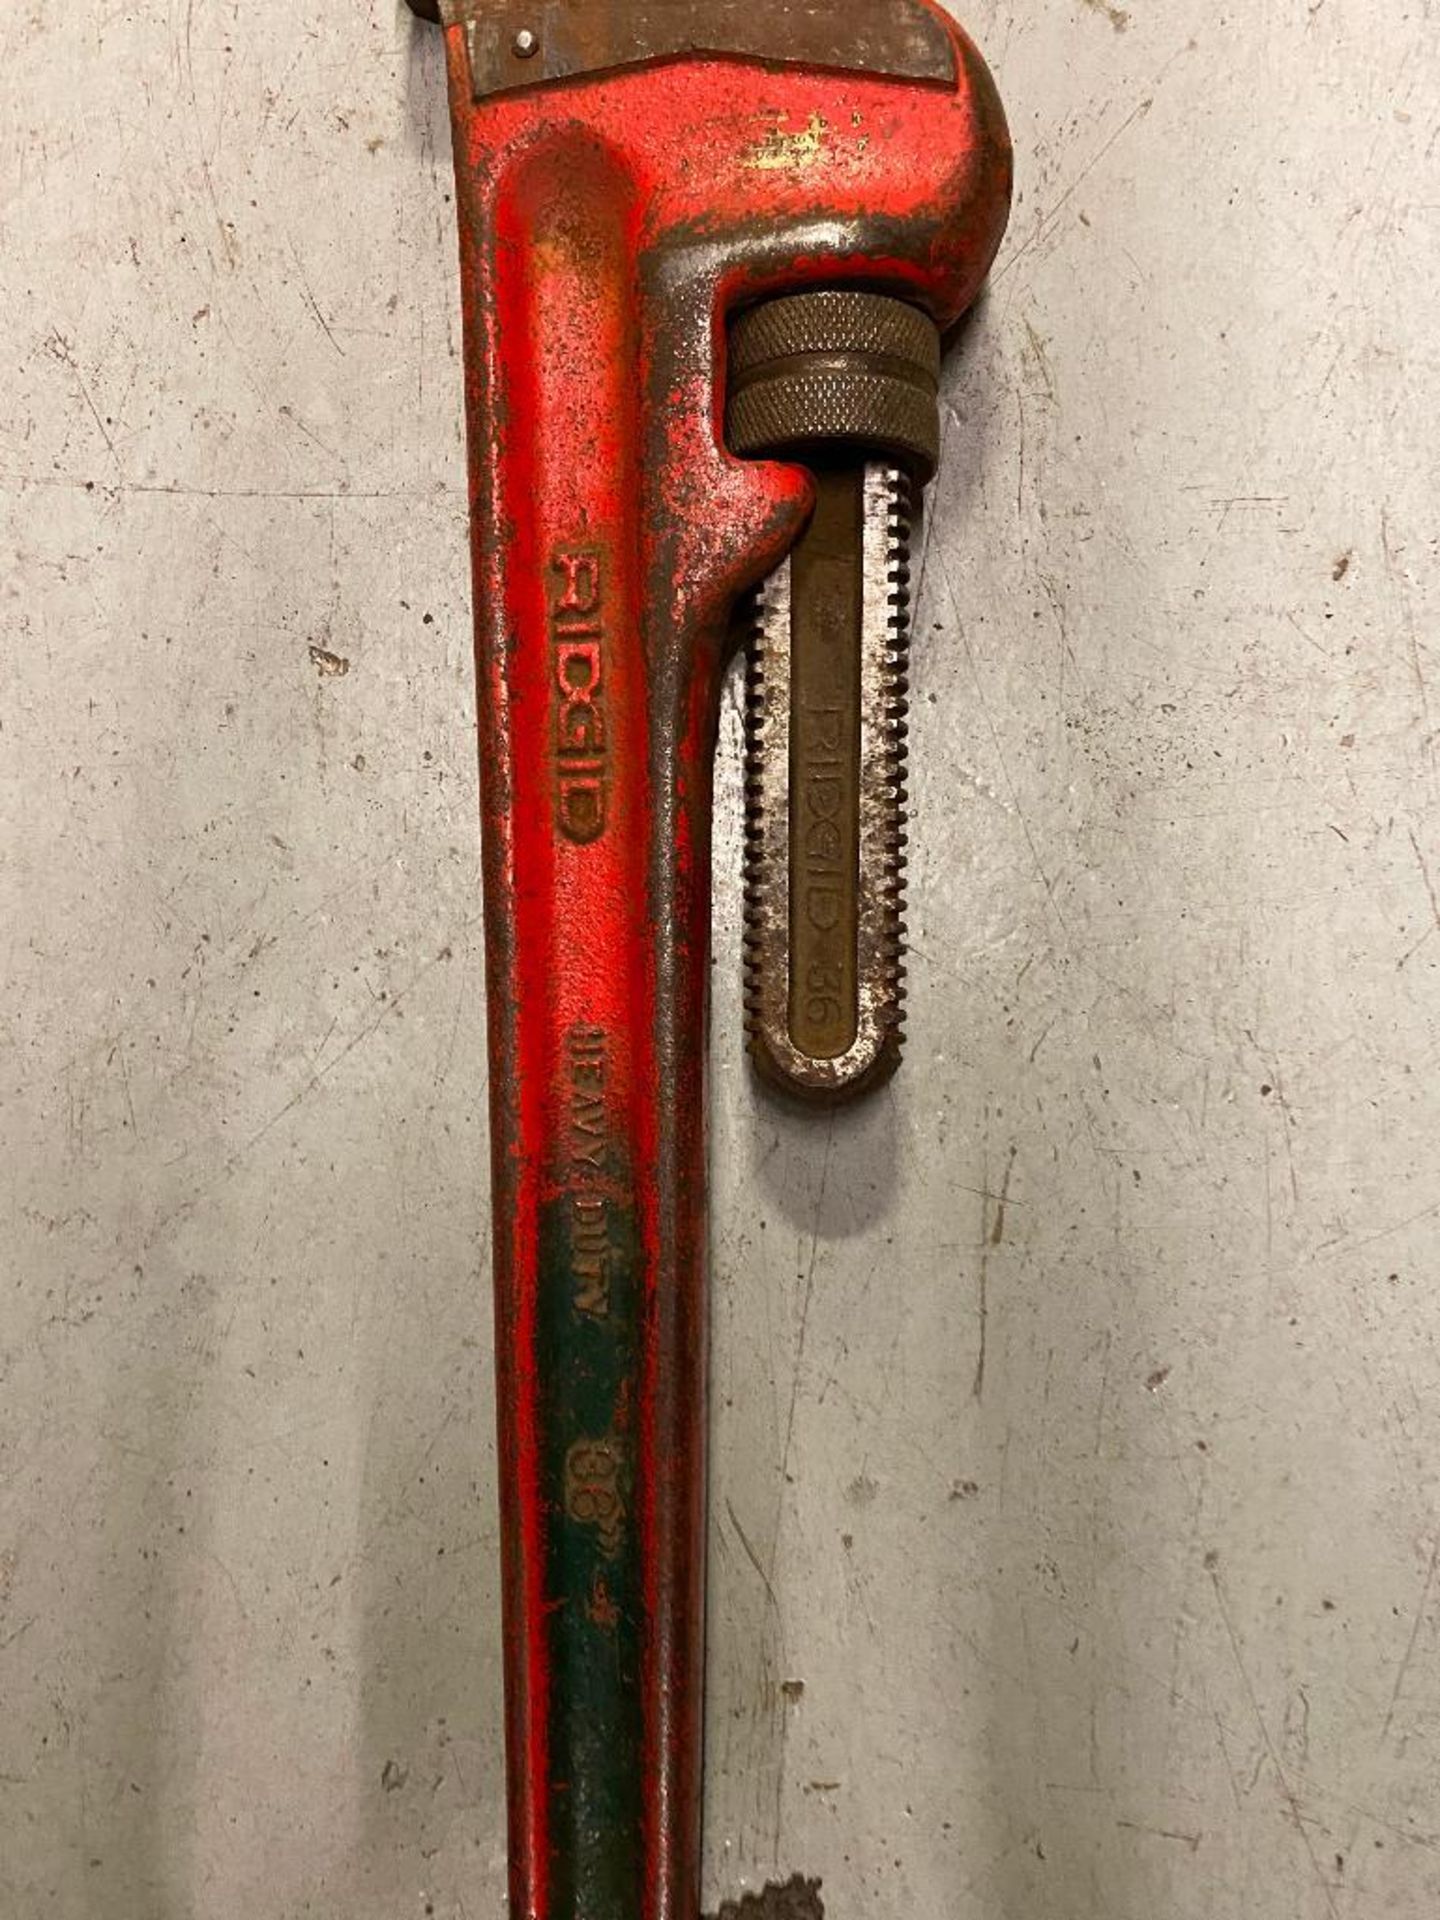 Ridgid 36" Pipe Wrench - Image 3 of 3